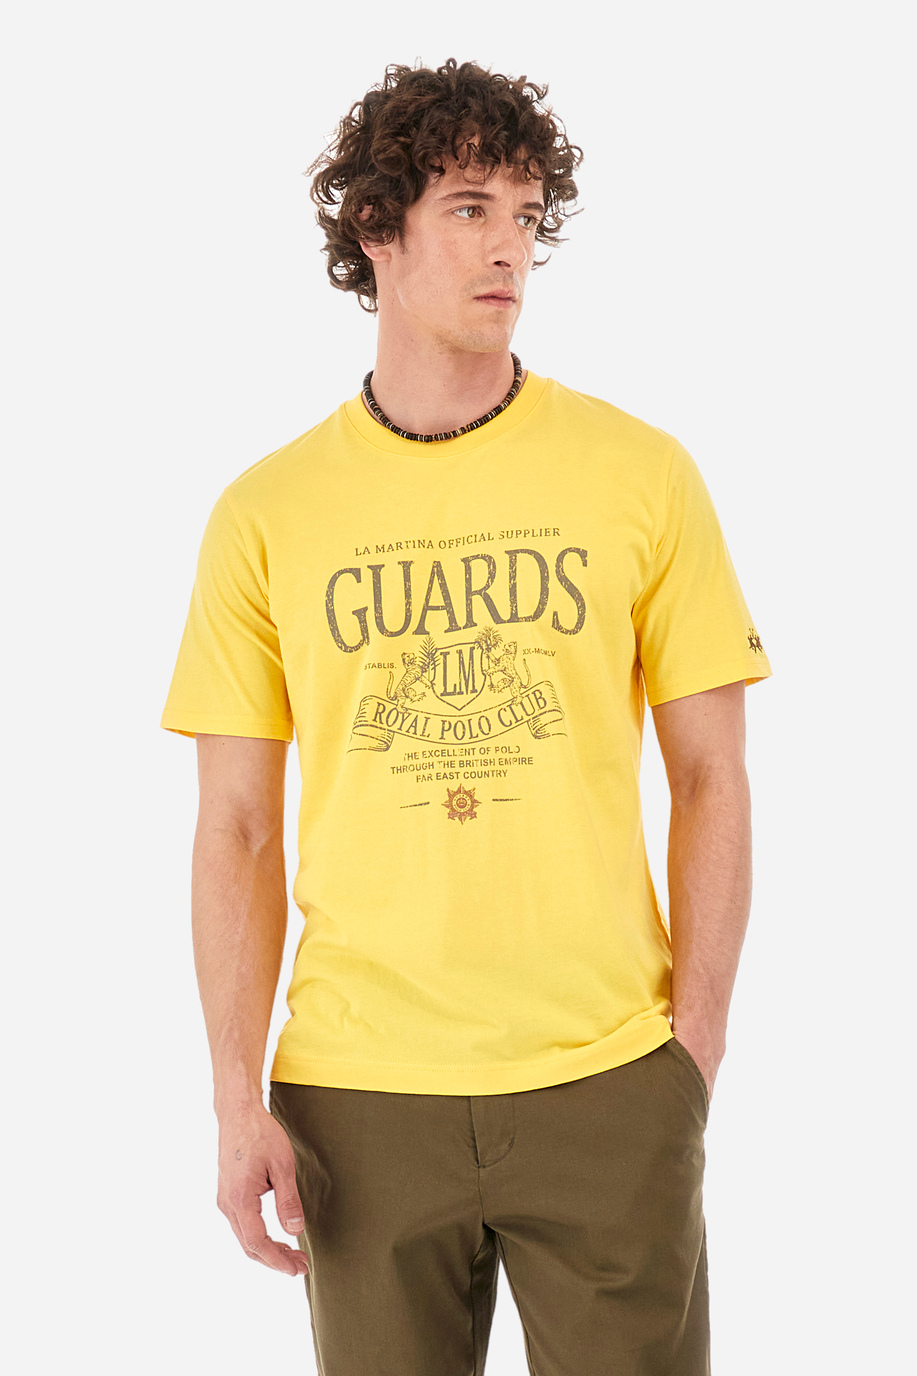 T-shirt regular fit in cotone - Yu - Guards - England | La Martina - Official Online Shop